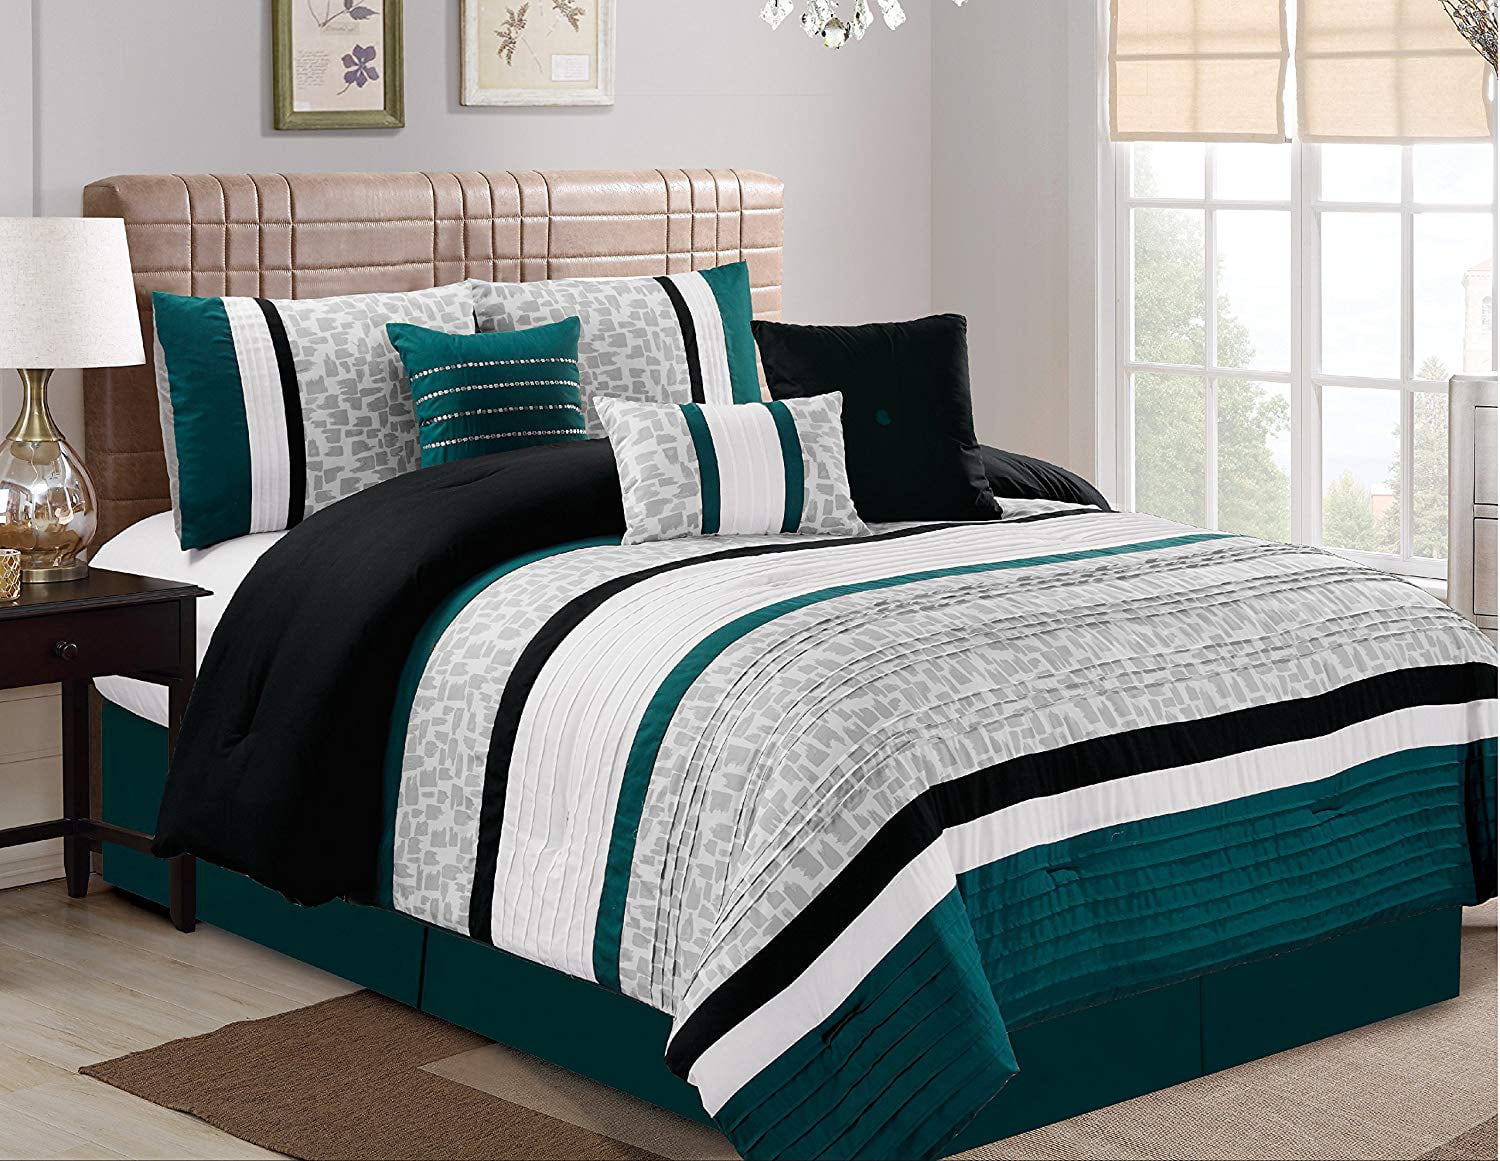 Hgmart Bedding Comforter Set 7 Piece, Luxury California King Bedroom Sets